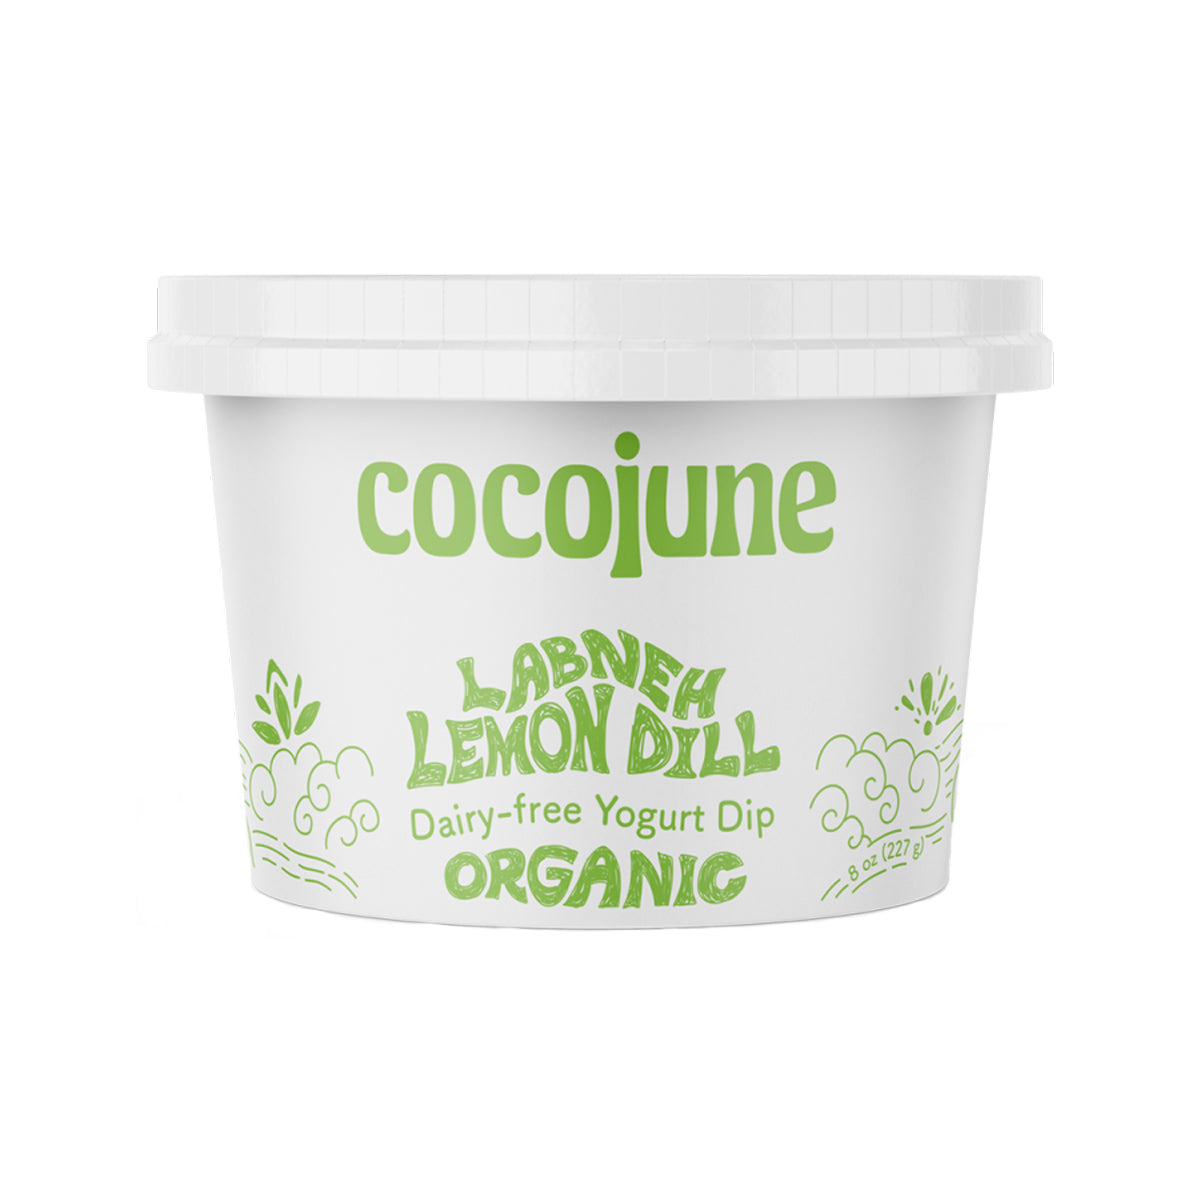 Cocojune Organic Vegan Coconut Labneh Lemon Dill 8 OZ